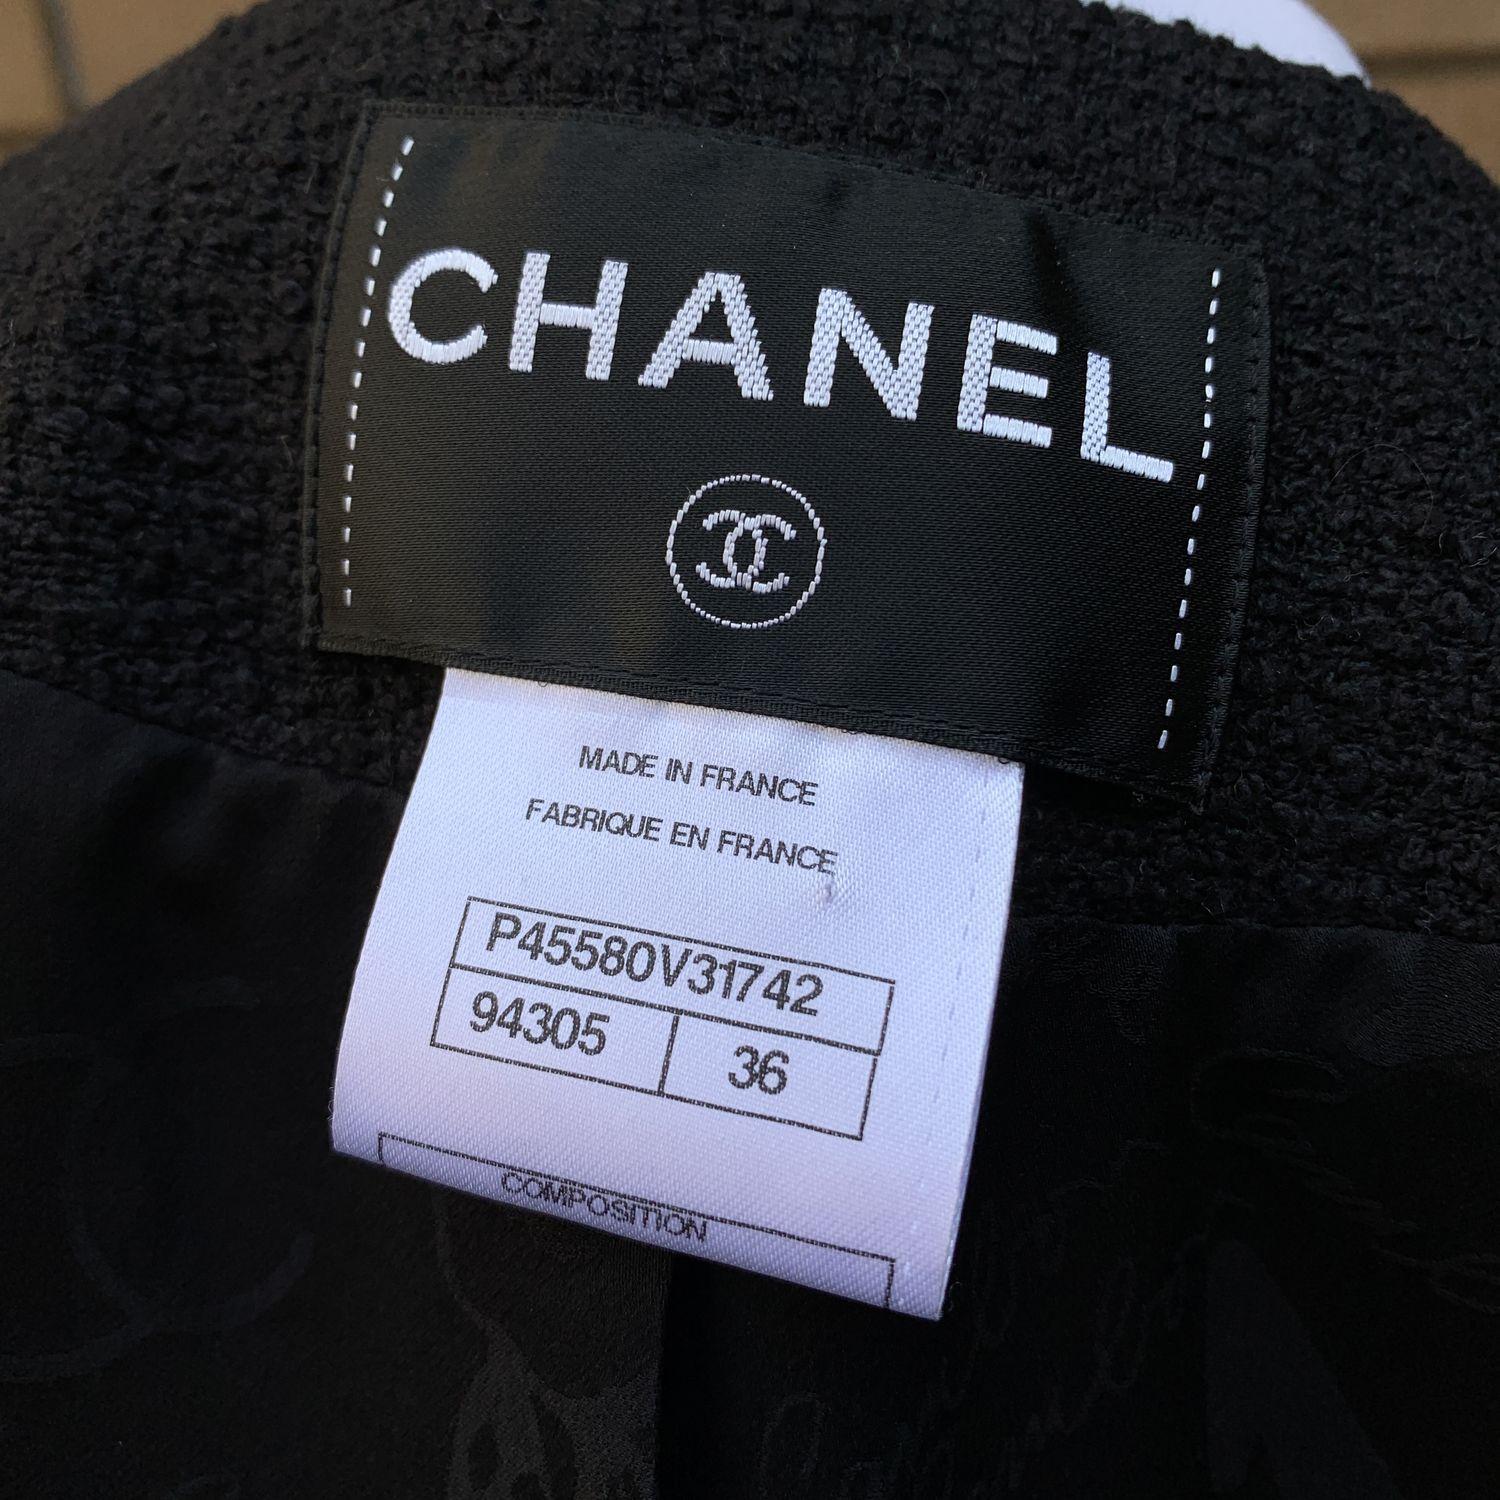 Chanel 2013 Black Cotton Tweed 3/4 Length Jacket Size 36 FR For Sale 2